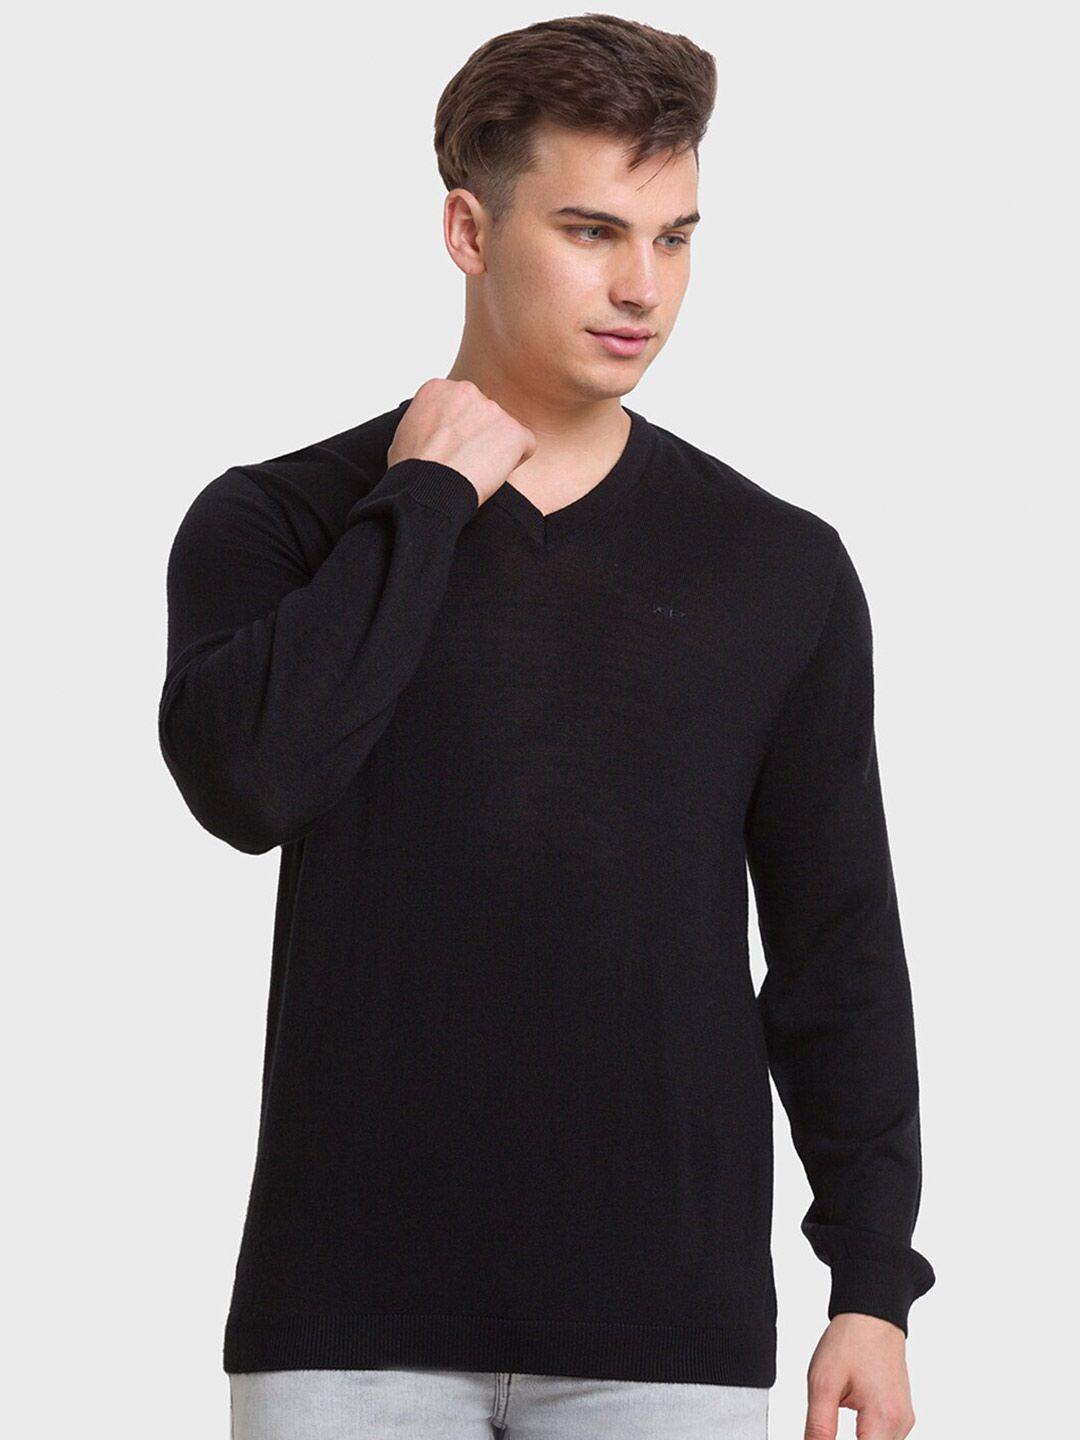 colorplus-men-black-woollen-long-sleeves-fashion